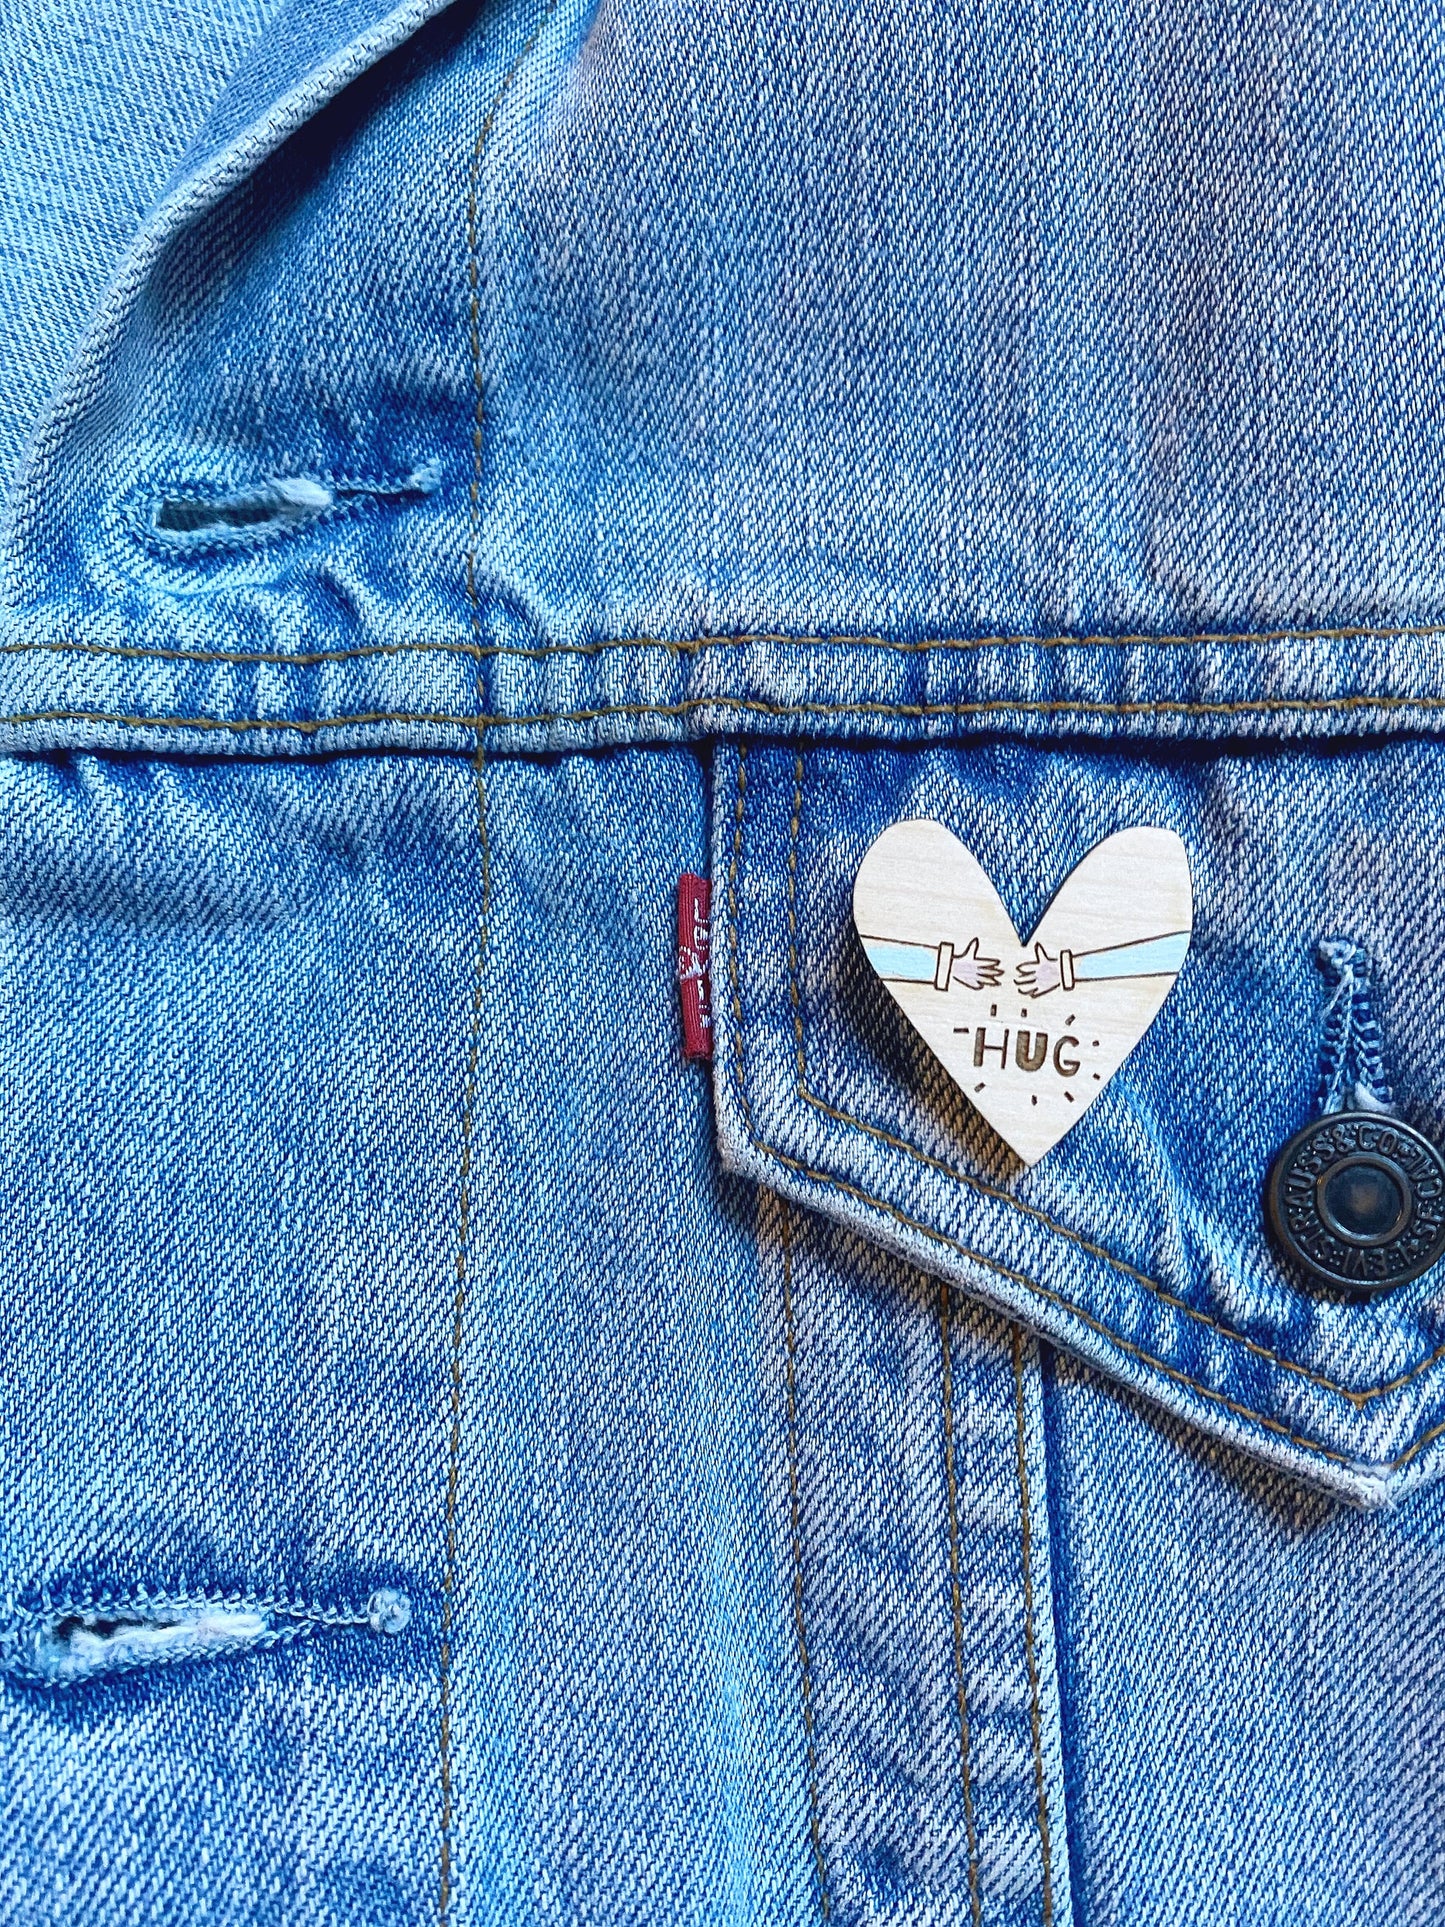 Hug heart hand-painted wooden pin badge